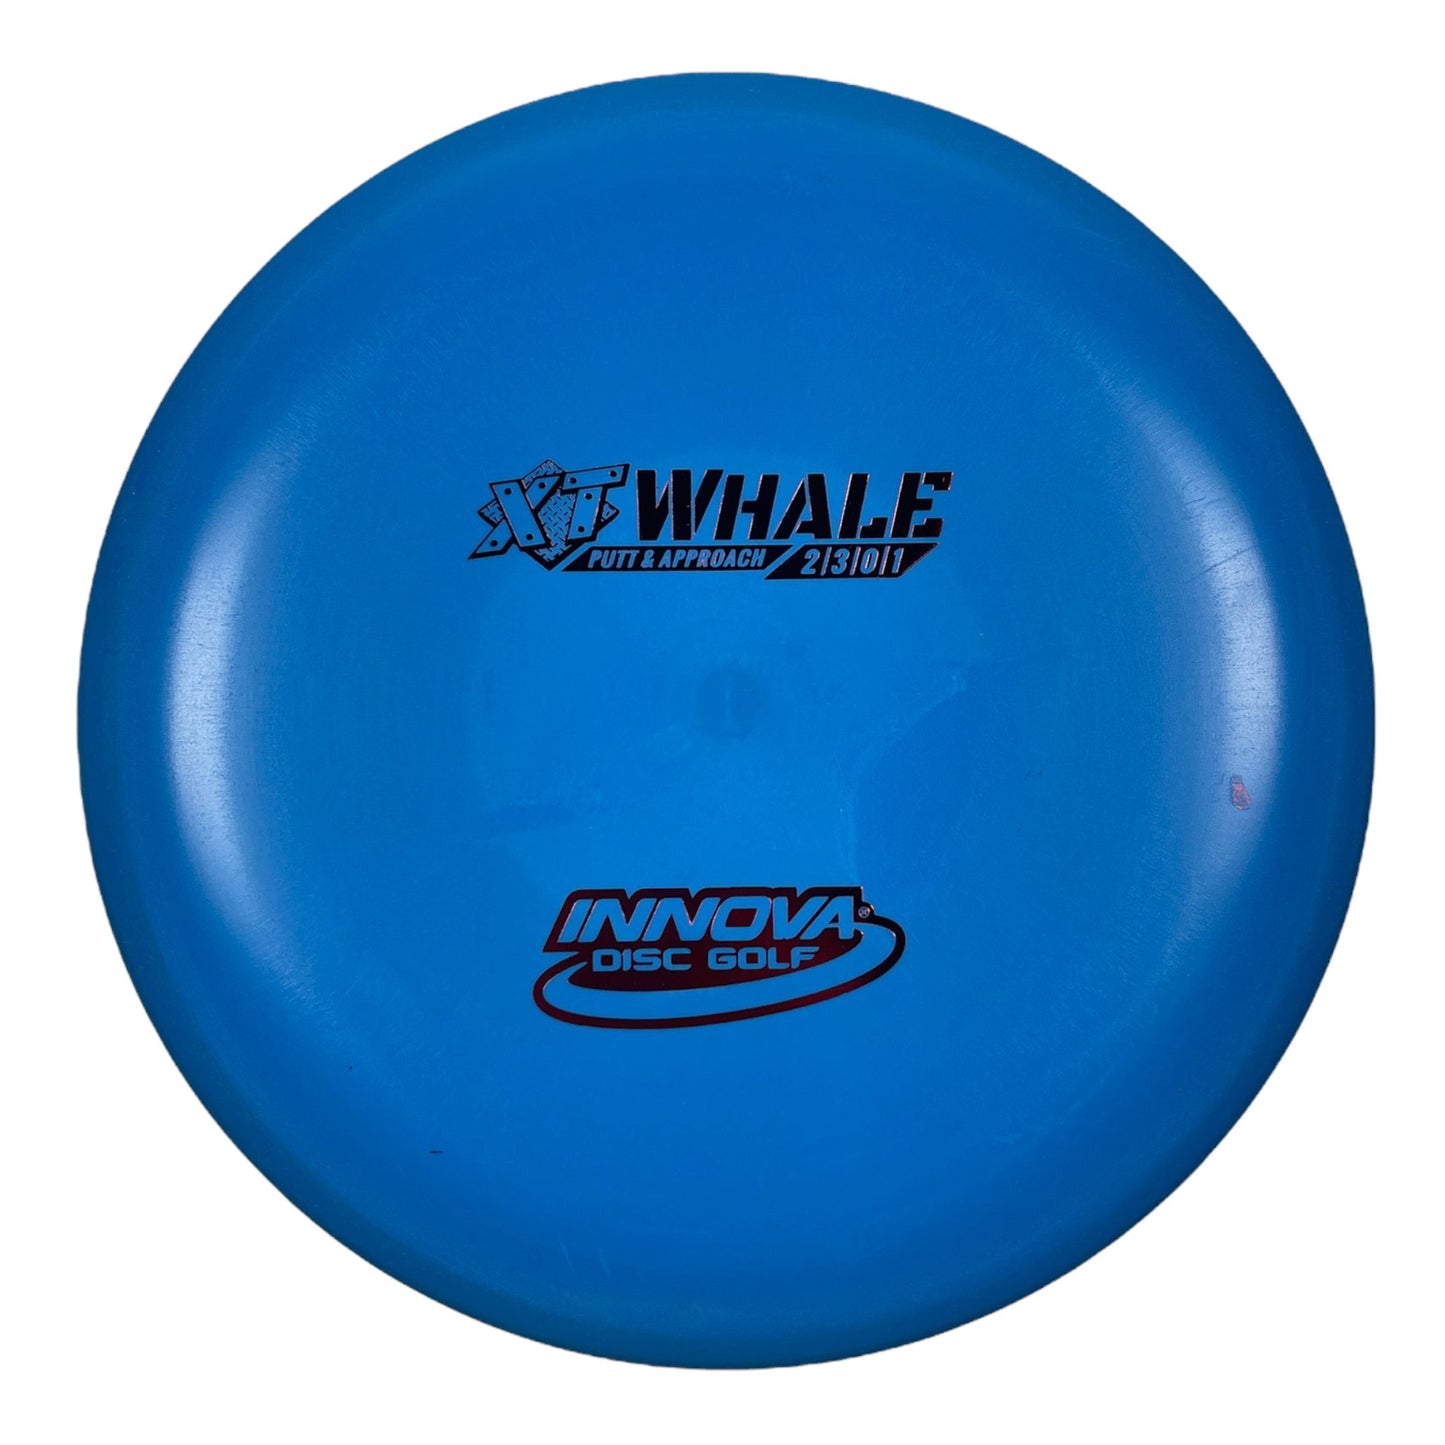 Innova Champion Discs Whale | XT | Blue/Red 169g Disc Golf